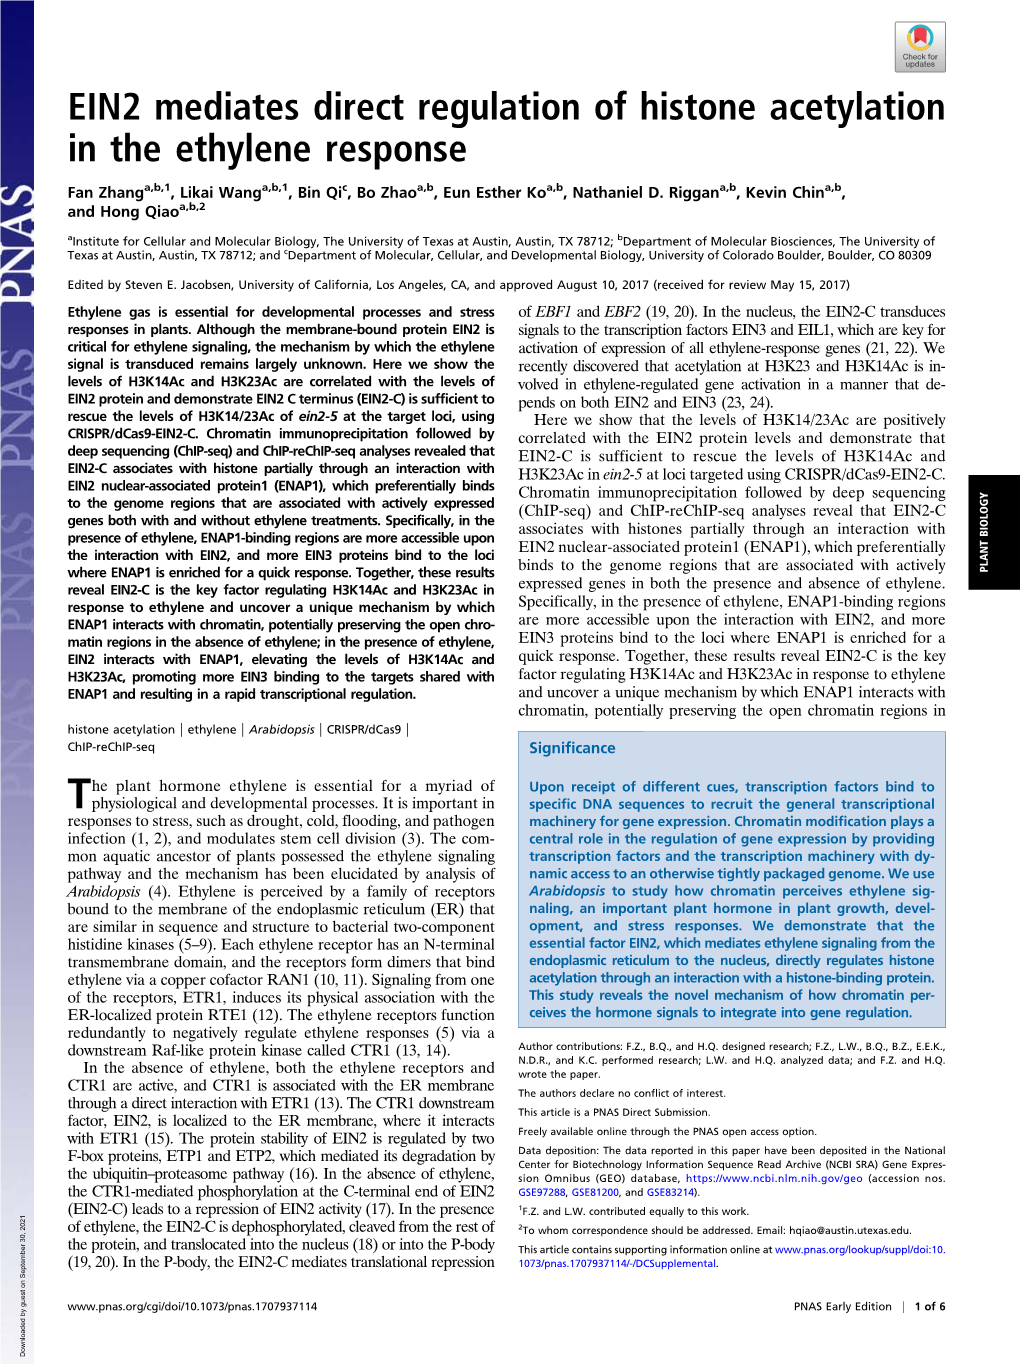 EIN2 Mediates Direct Regulation of Histone Acetylation in the Ethylene Response